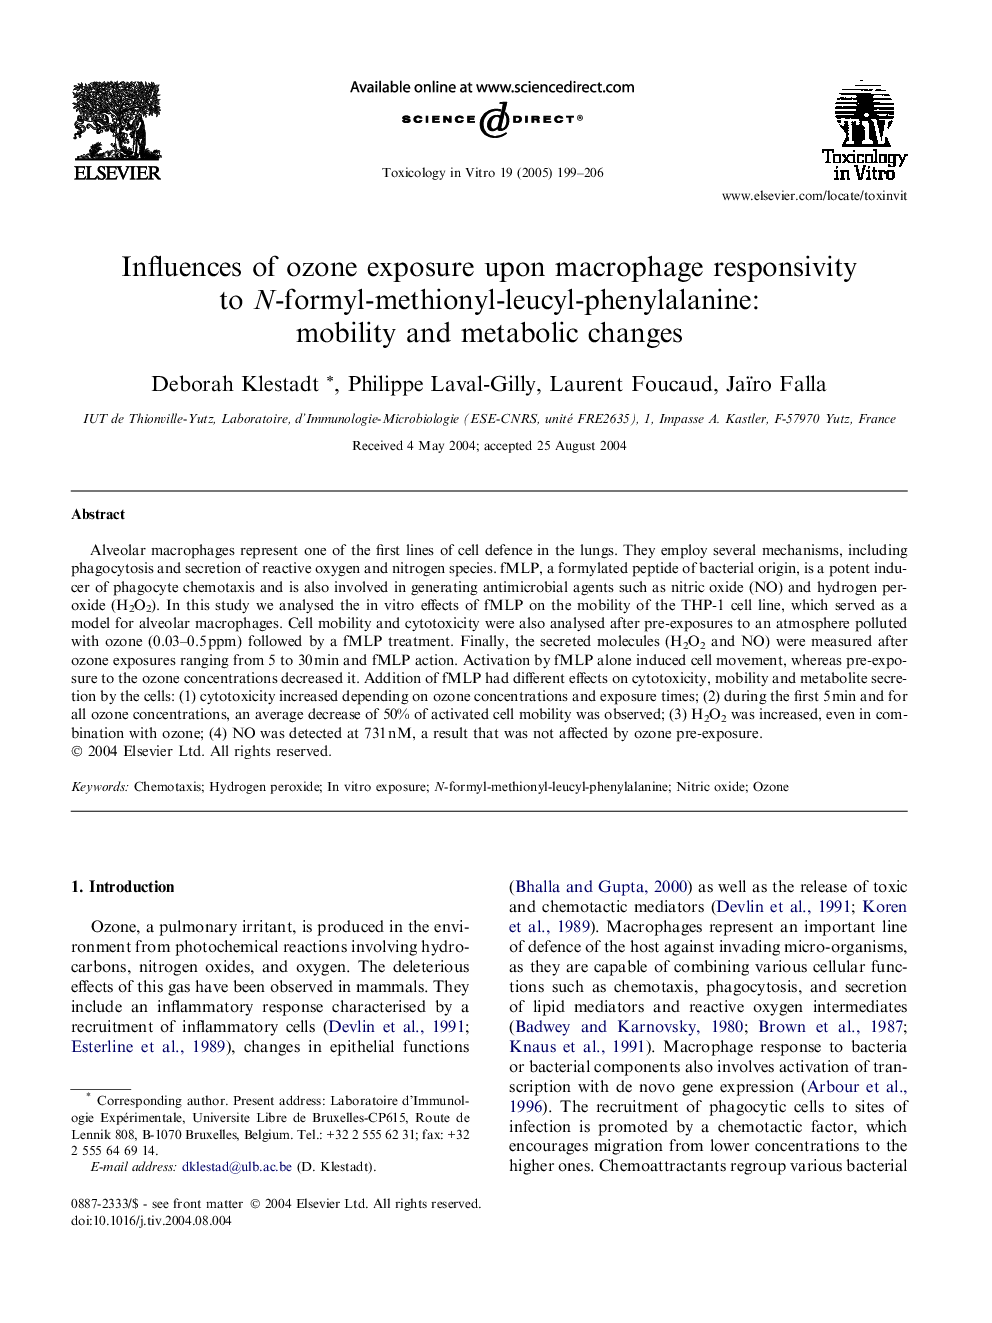 Influences of ozone exposure upon macrophage responsivity to N-formyl-methionyl-leucyl-phenylalanine: mobility and metabolic changes